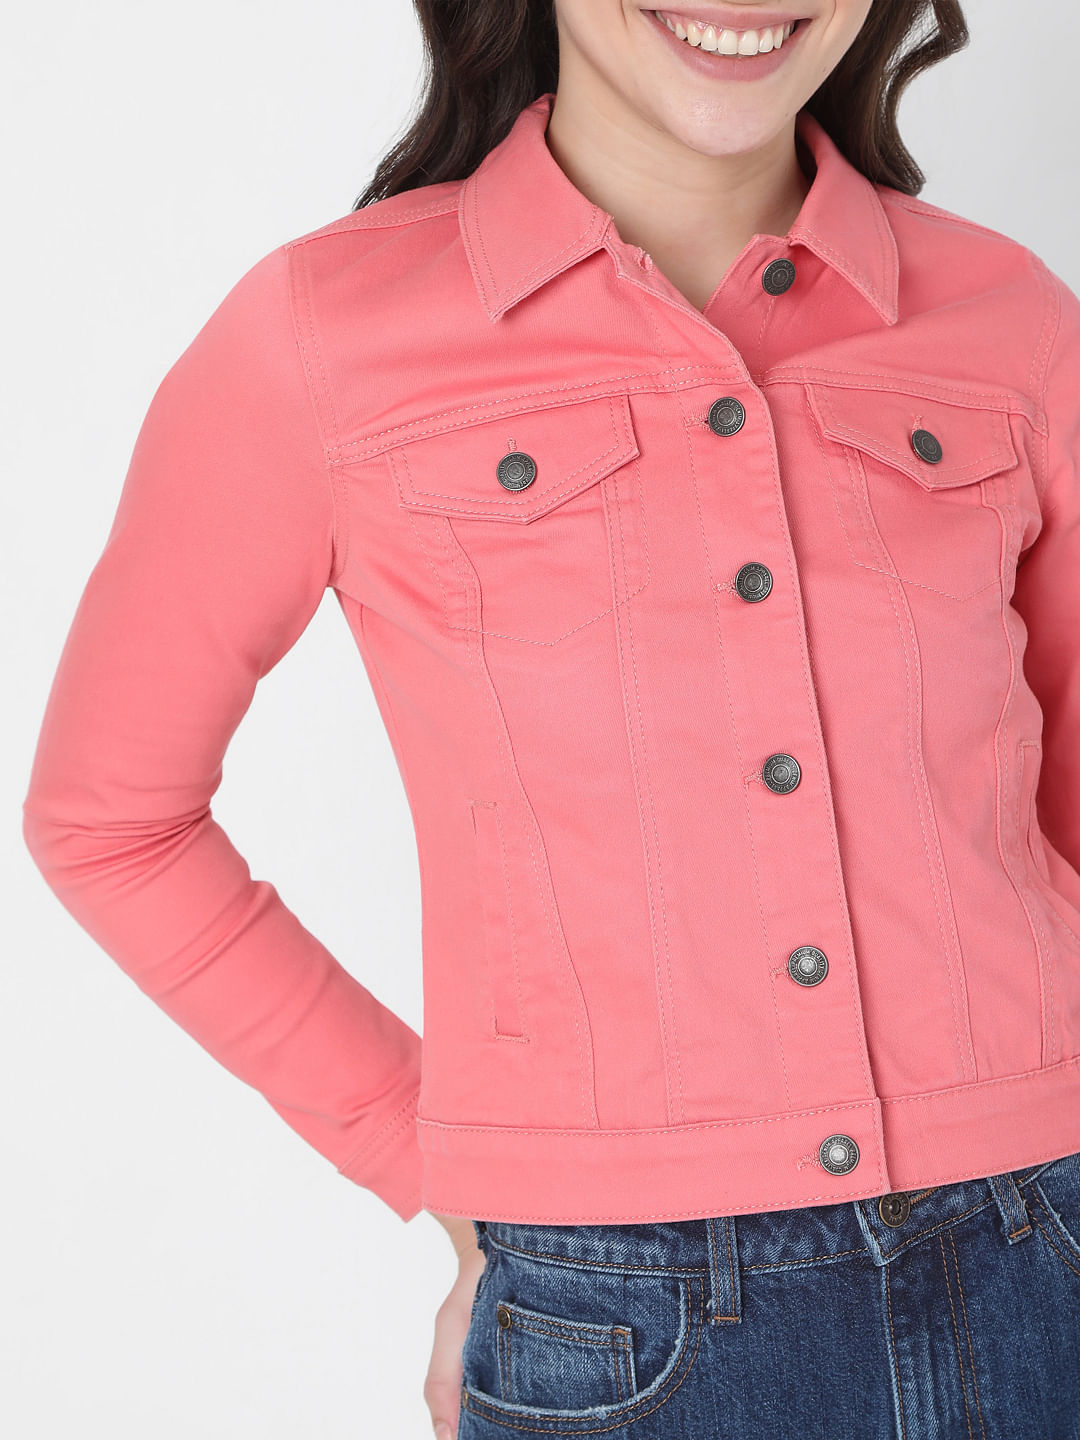 Peach Solid Denim Jacket - Buy Peach Solid Denim Jacket online in India